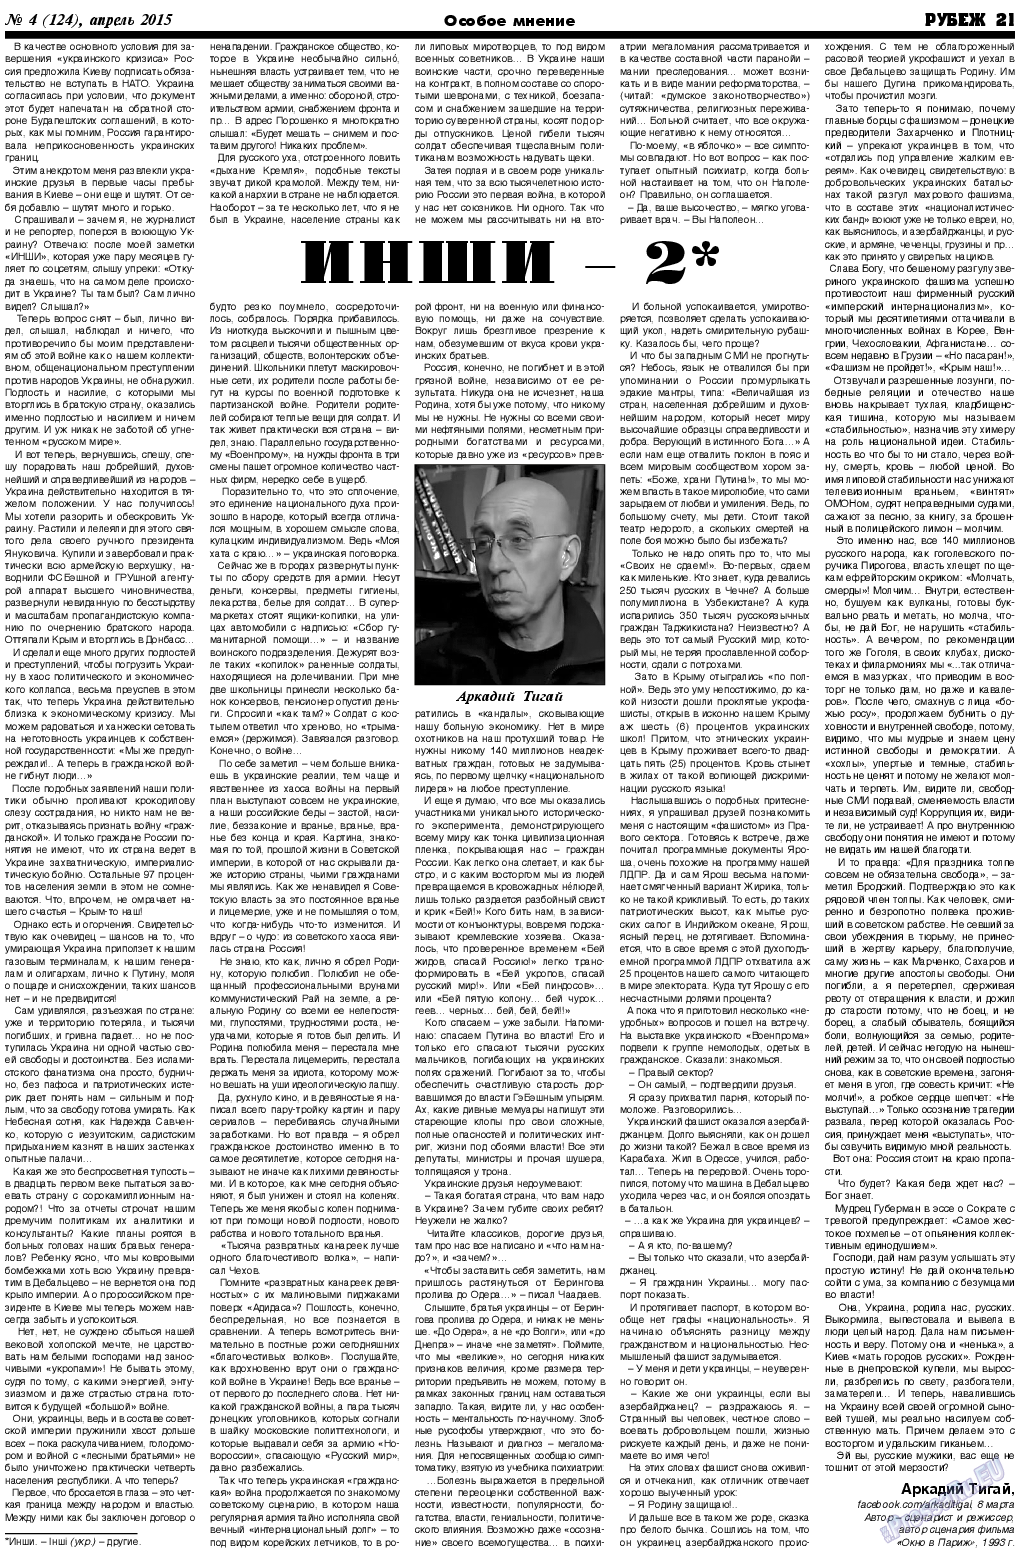 Рубеж, газета. 2015 №4 стр.21